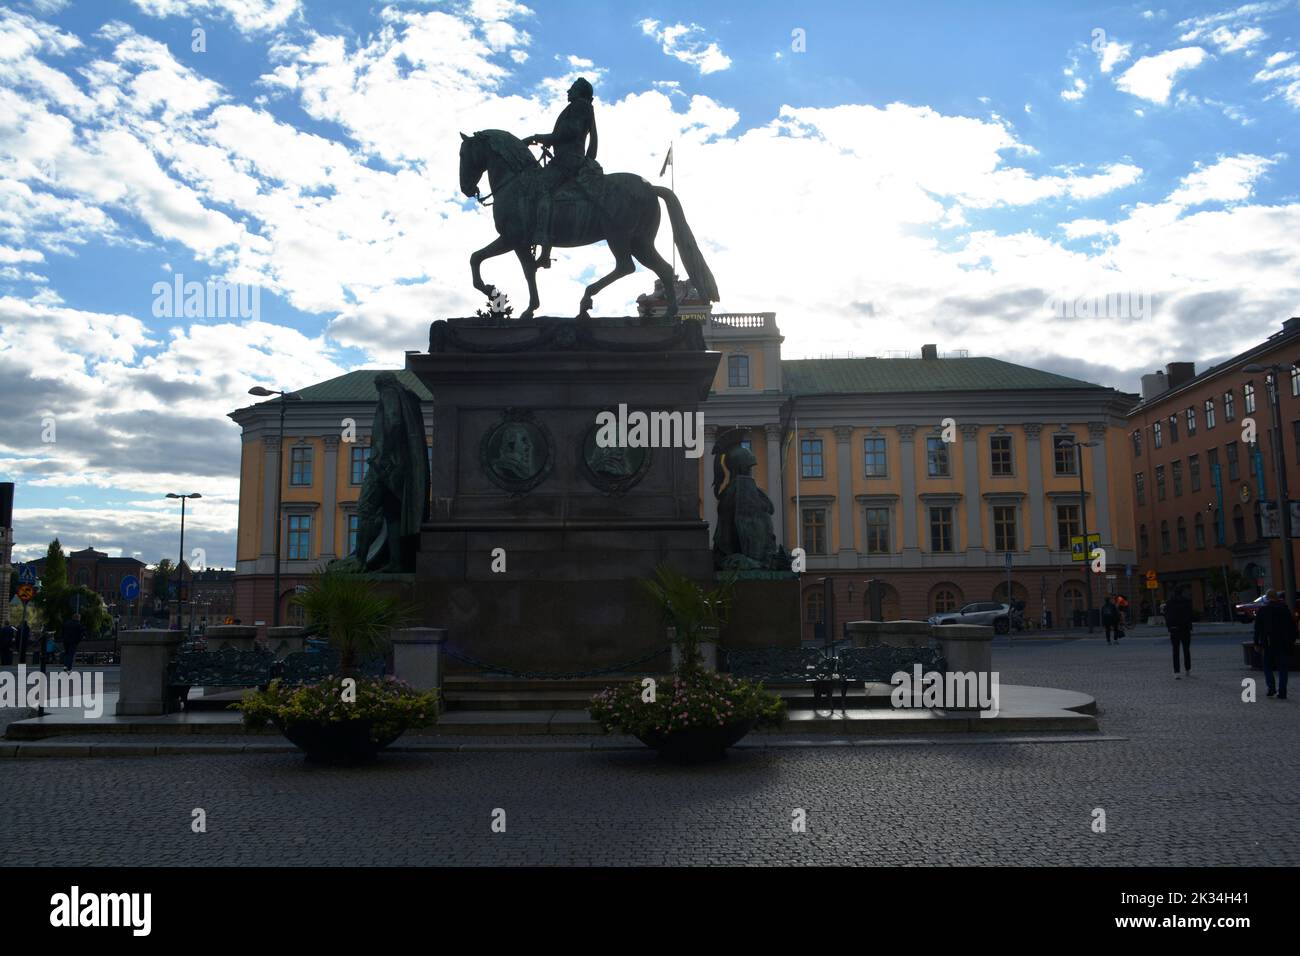 Stockholm, Sweden, September 2022: Equestrian statue of king Gustavus Adolphus, also known as Adolf Gustav II, located in Gustav Adolfs torg square. Stock Photo